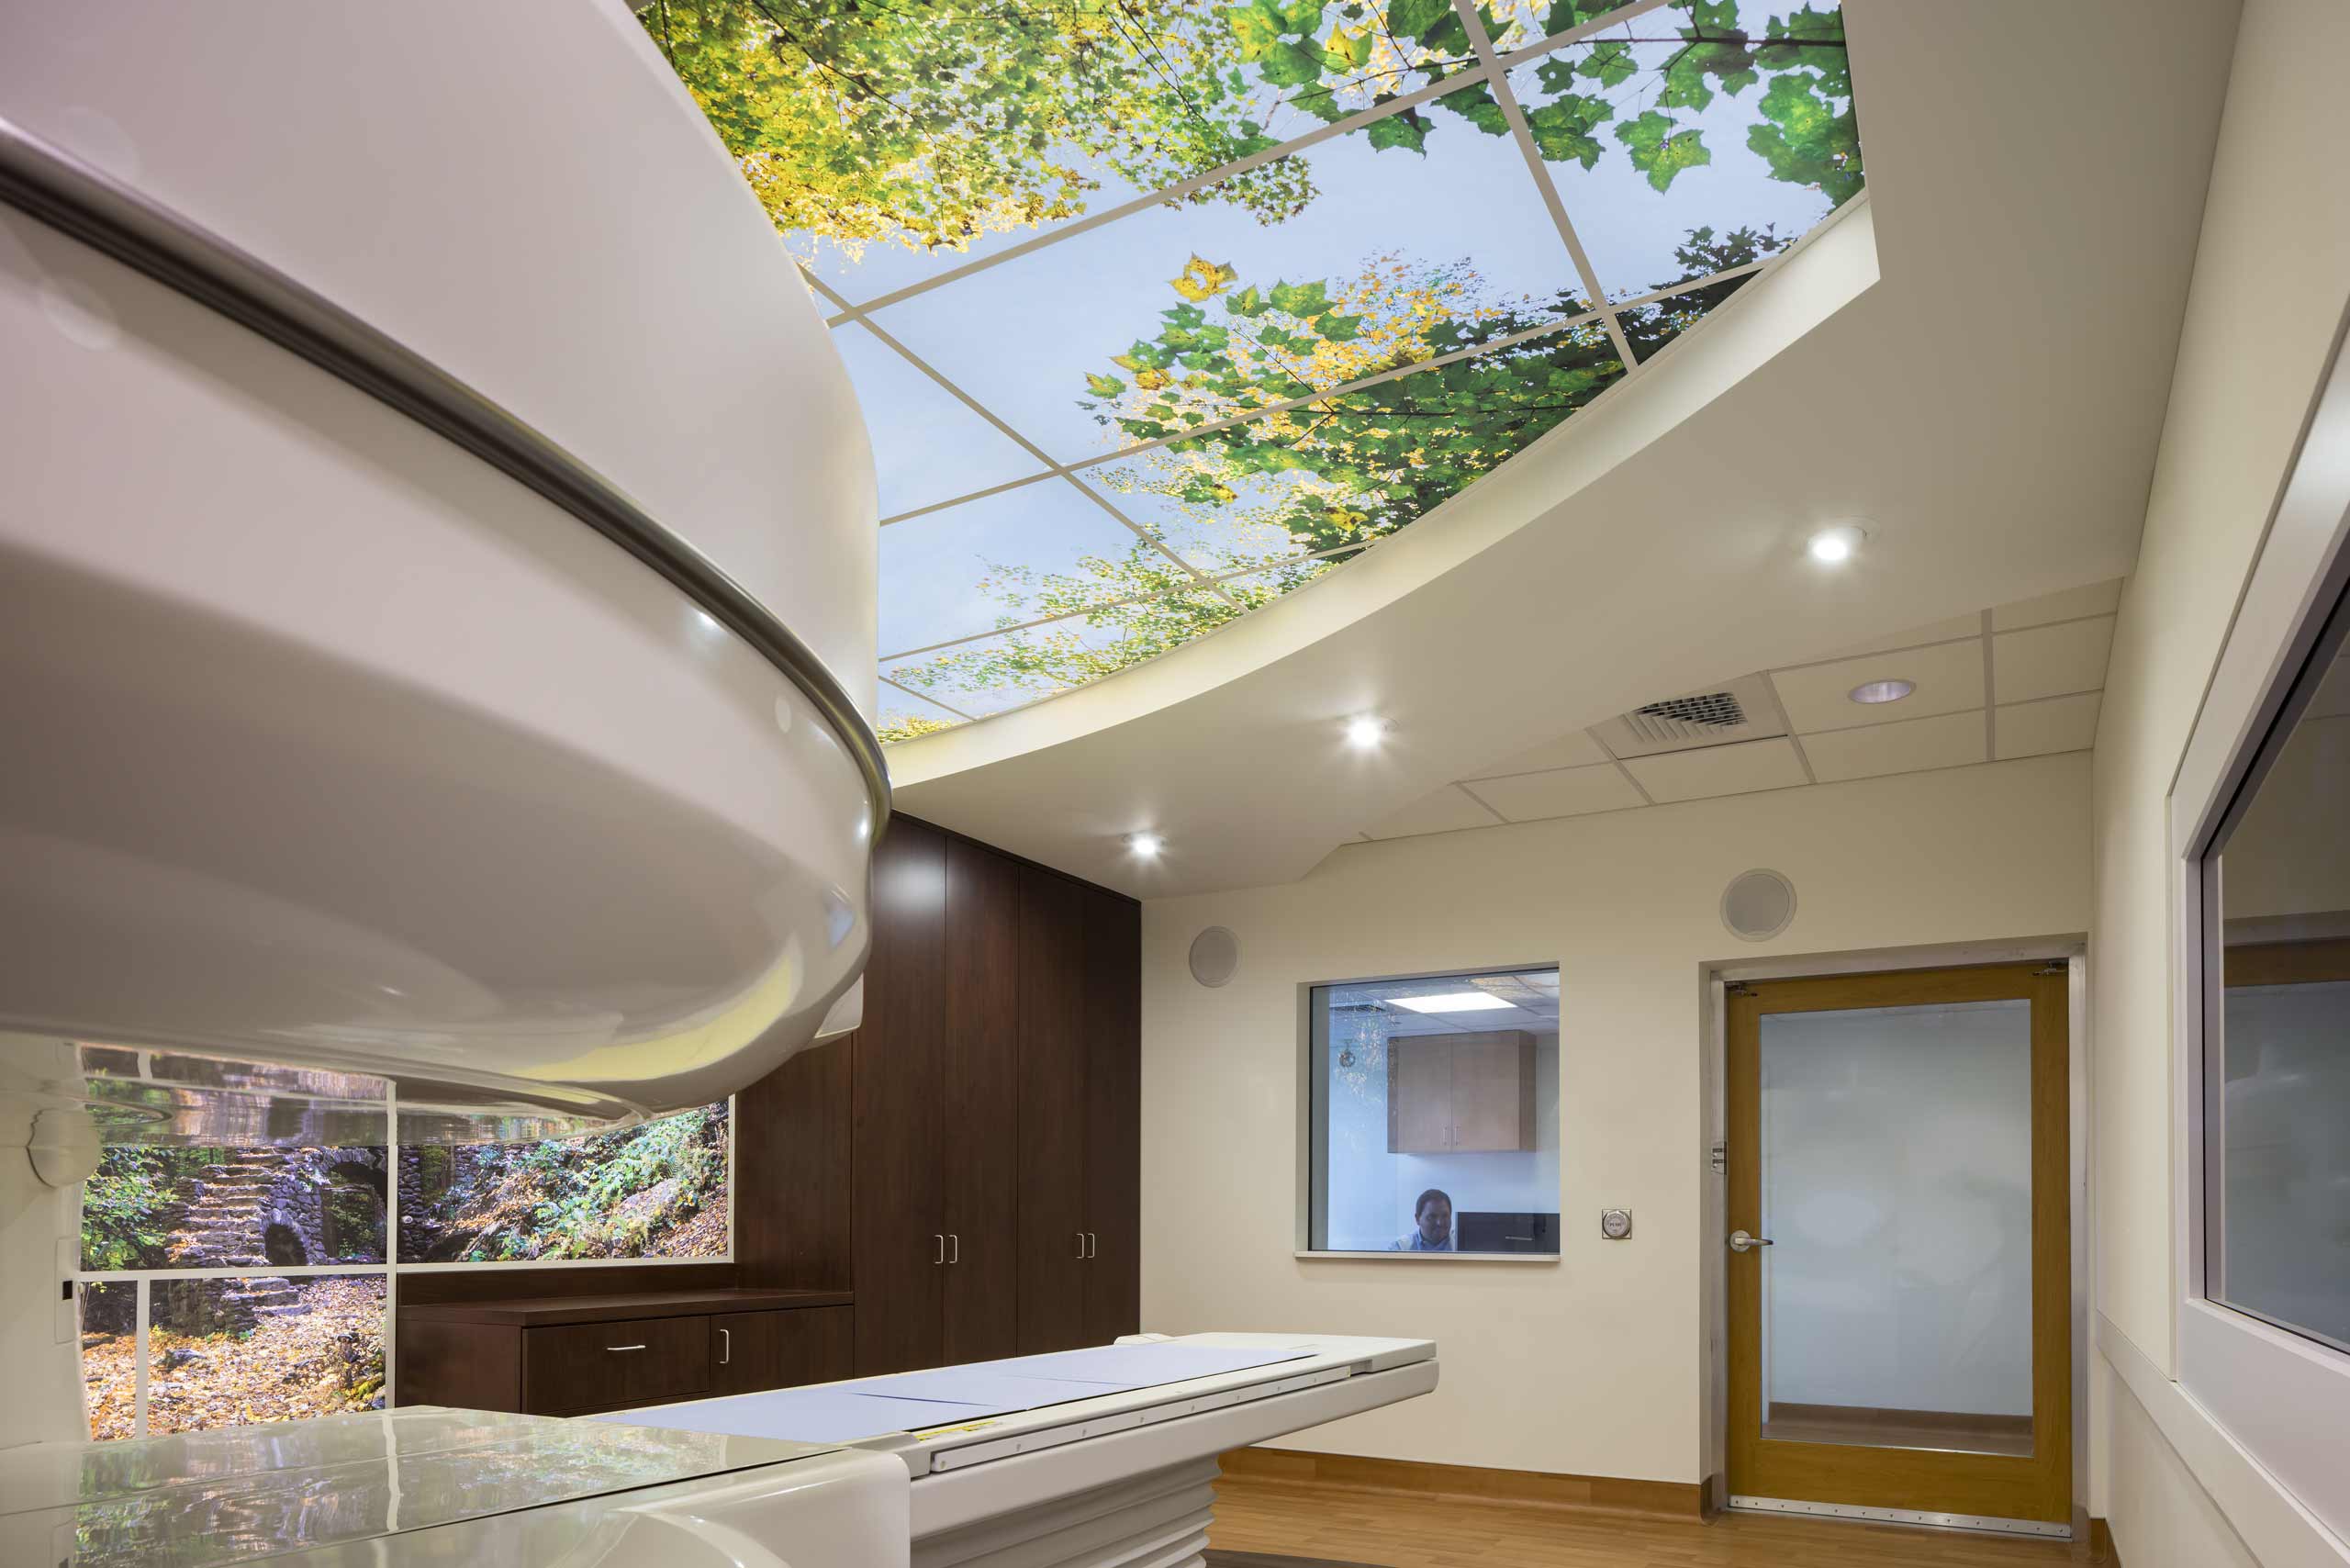 Caring MR Suite featuring LED Illuminated Image Ceiling®, MRI LED Lighting and MRI audio Imaging Suite Speakers